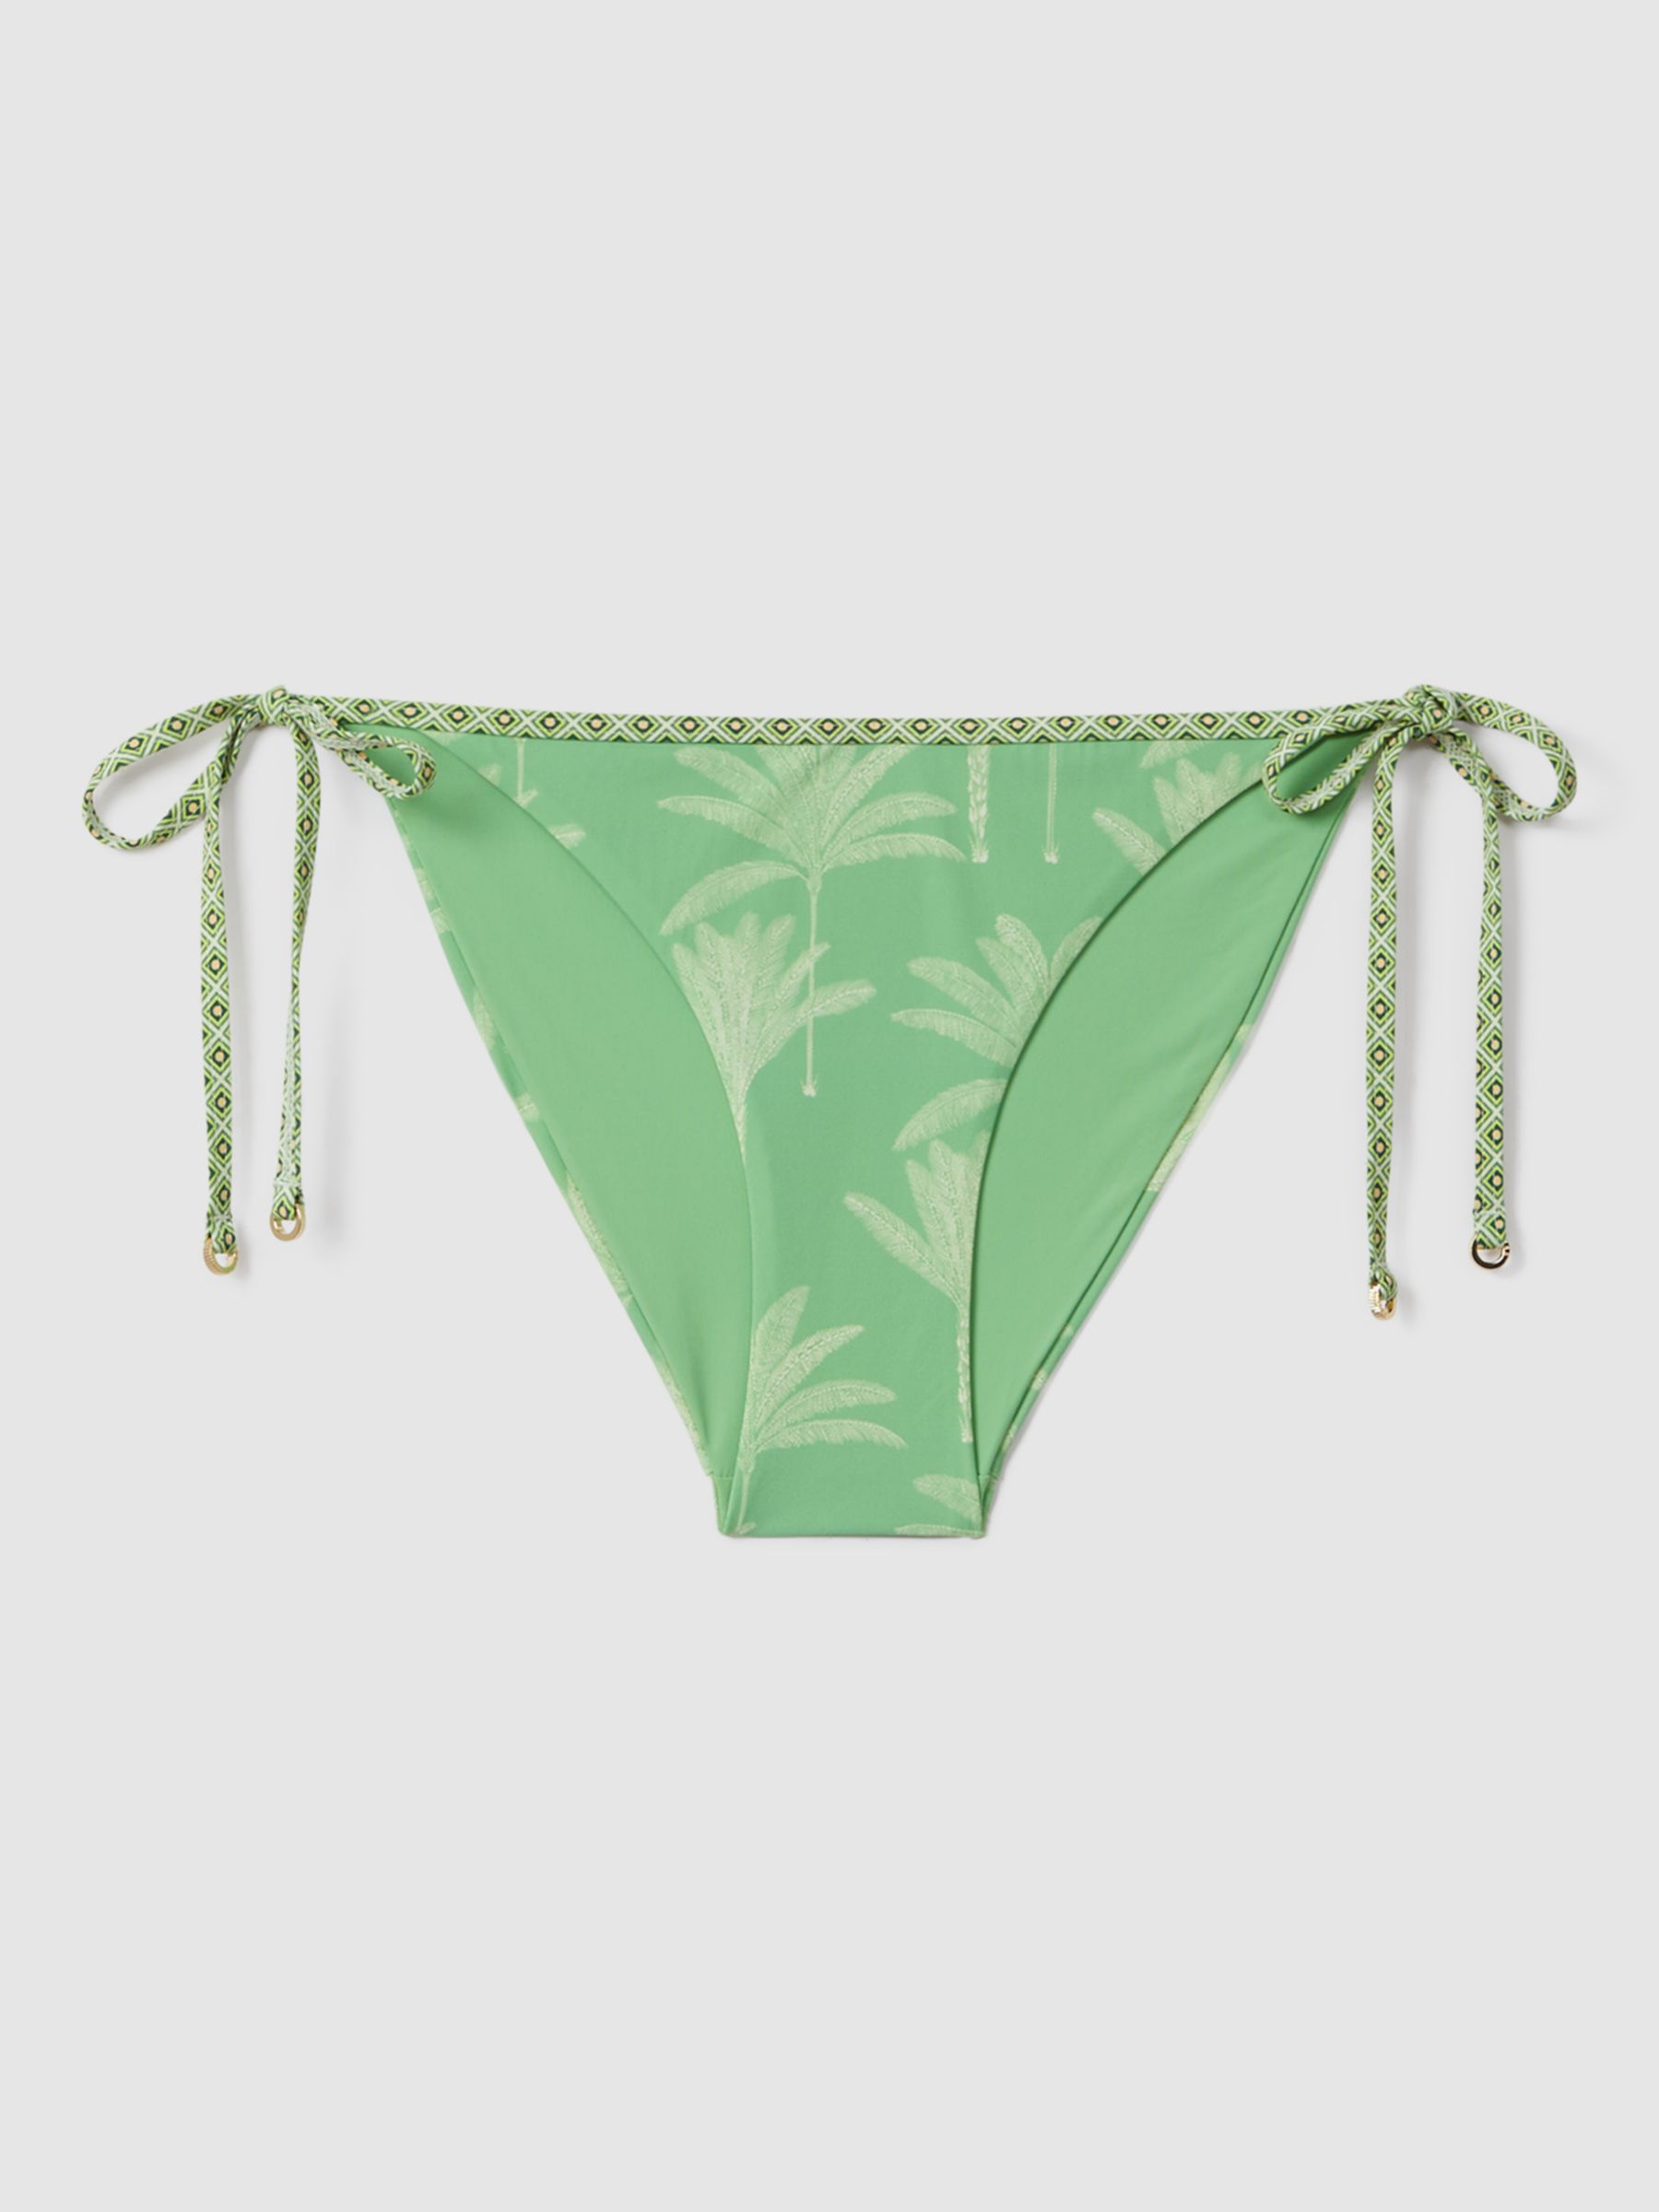 Reiss Thia Palm Tree Print Tie Side Bikini Bottoms, Green/Cream, 6